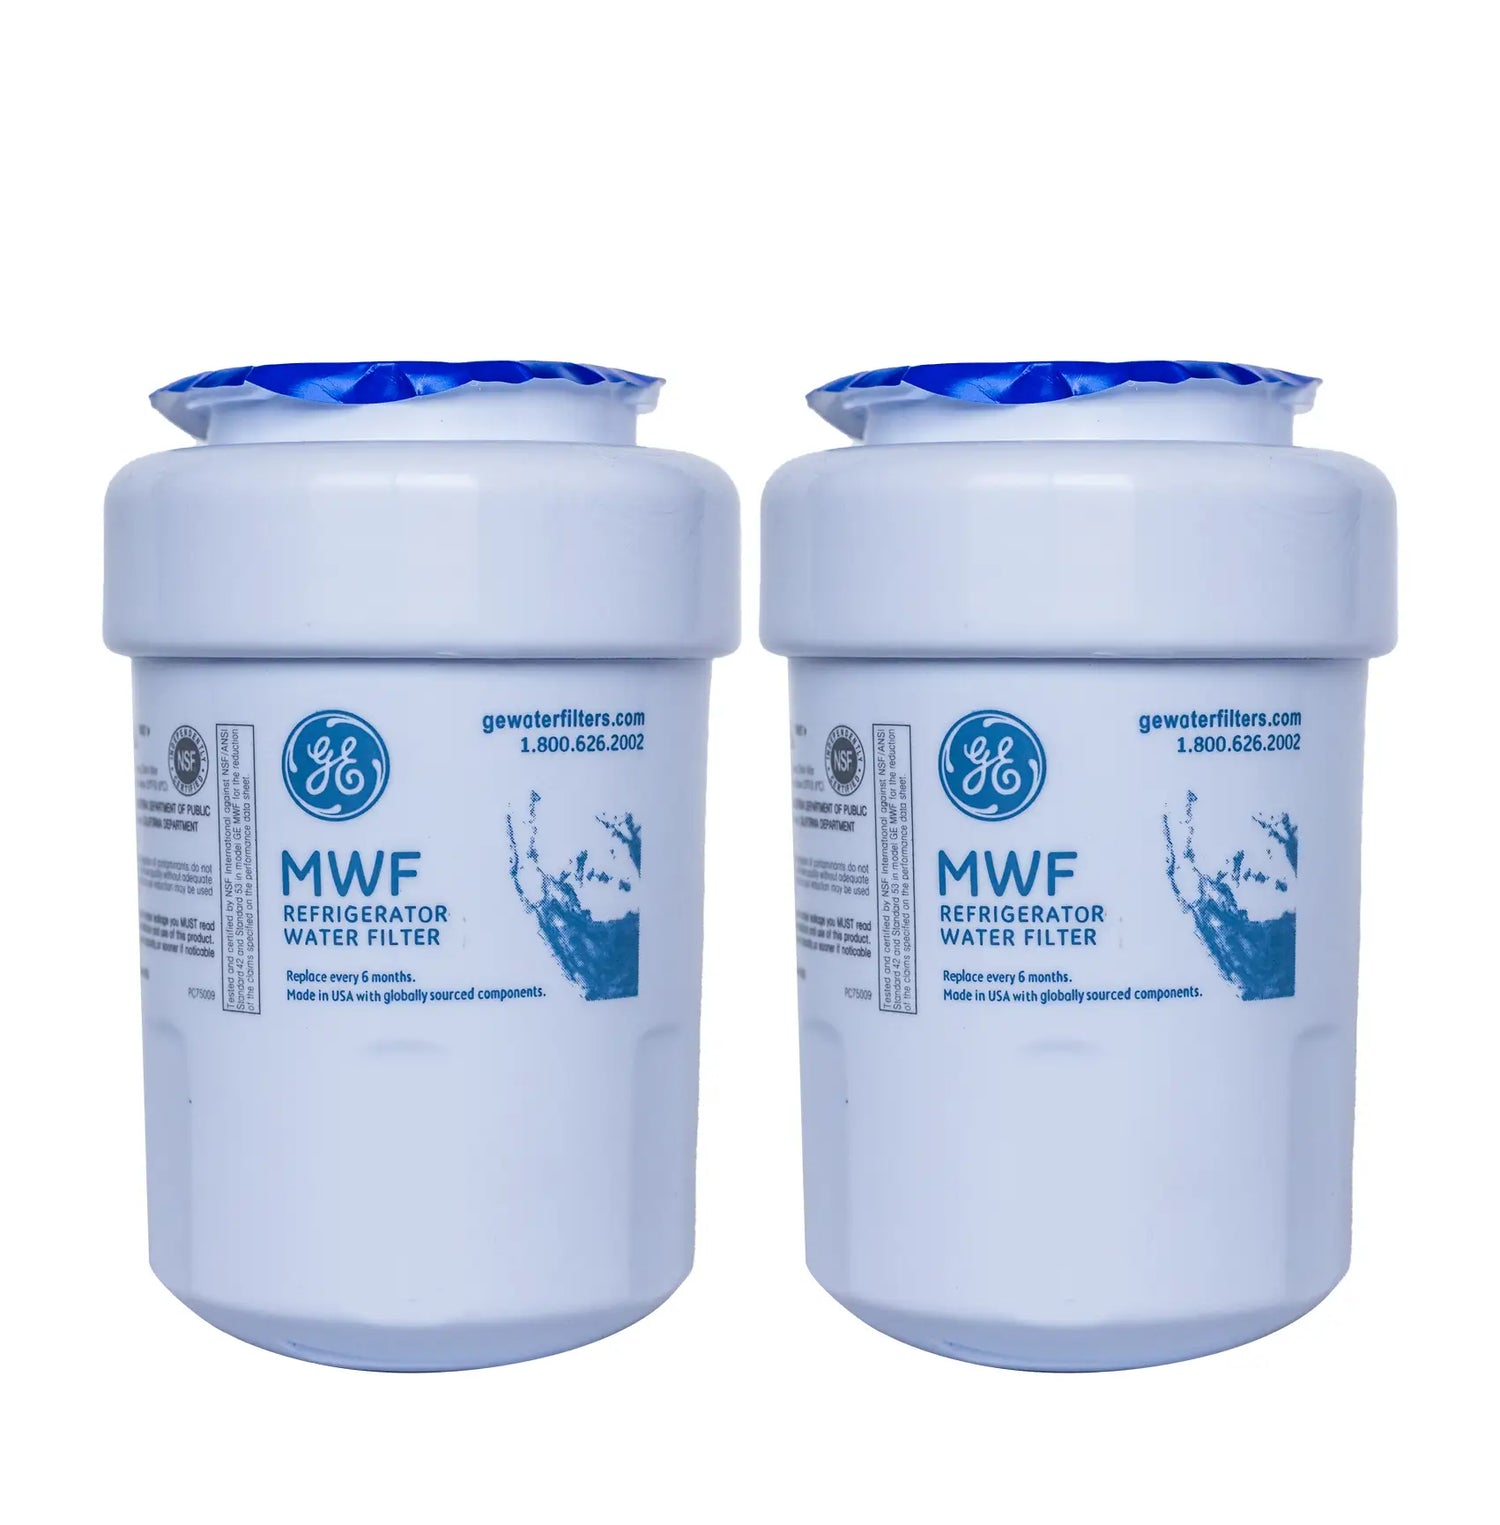 GE MWF Refrigerator Water Filter, 2 Pack